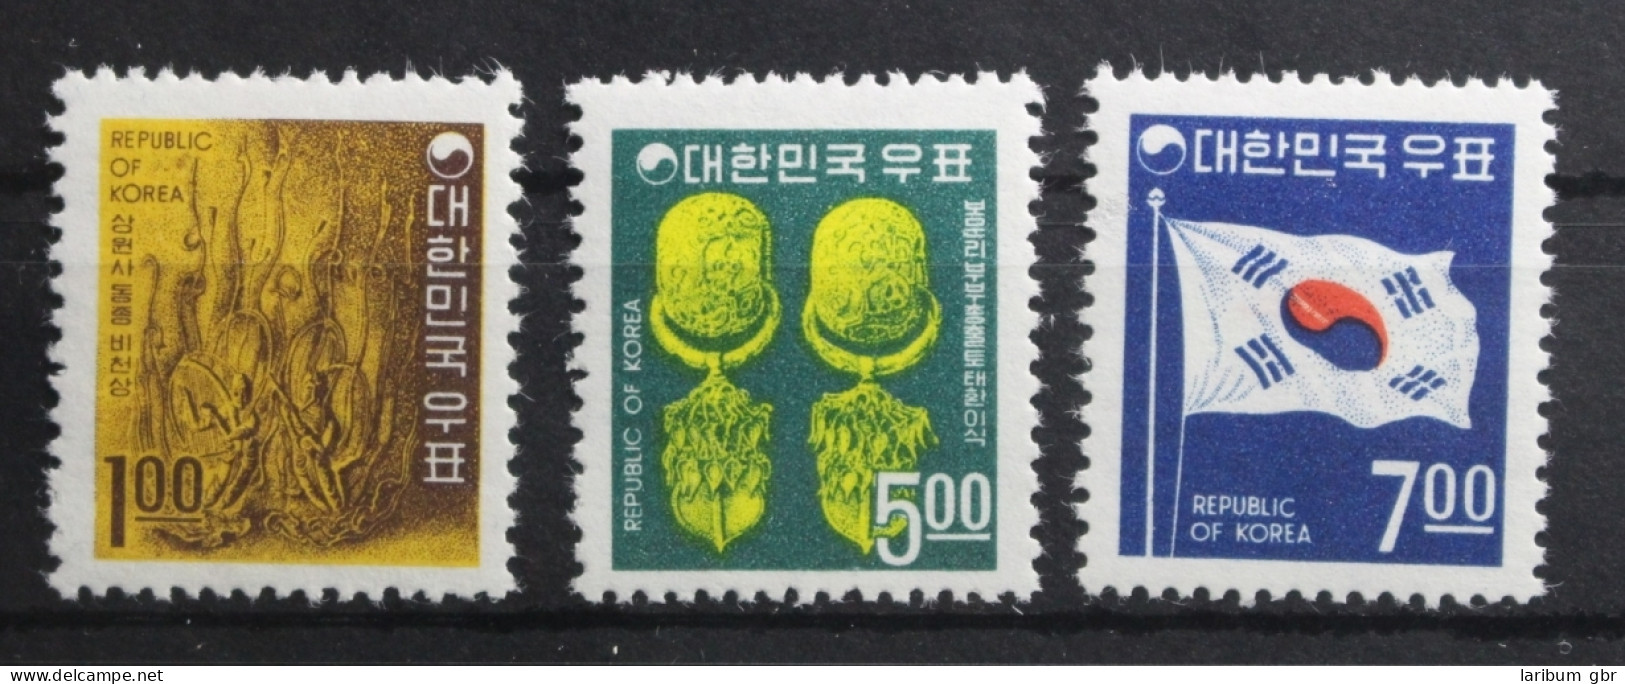 Südkorea 605-607 Postfrisch #TL863 - Korea (Süd-)